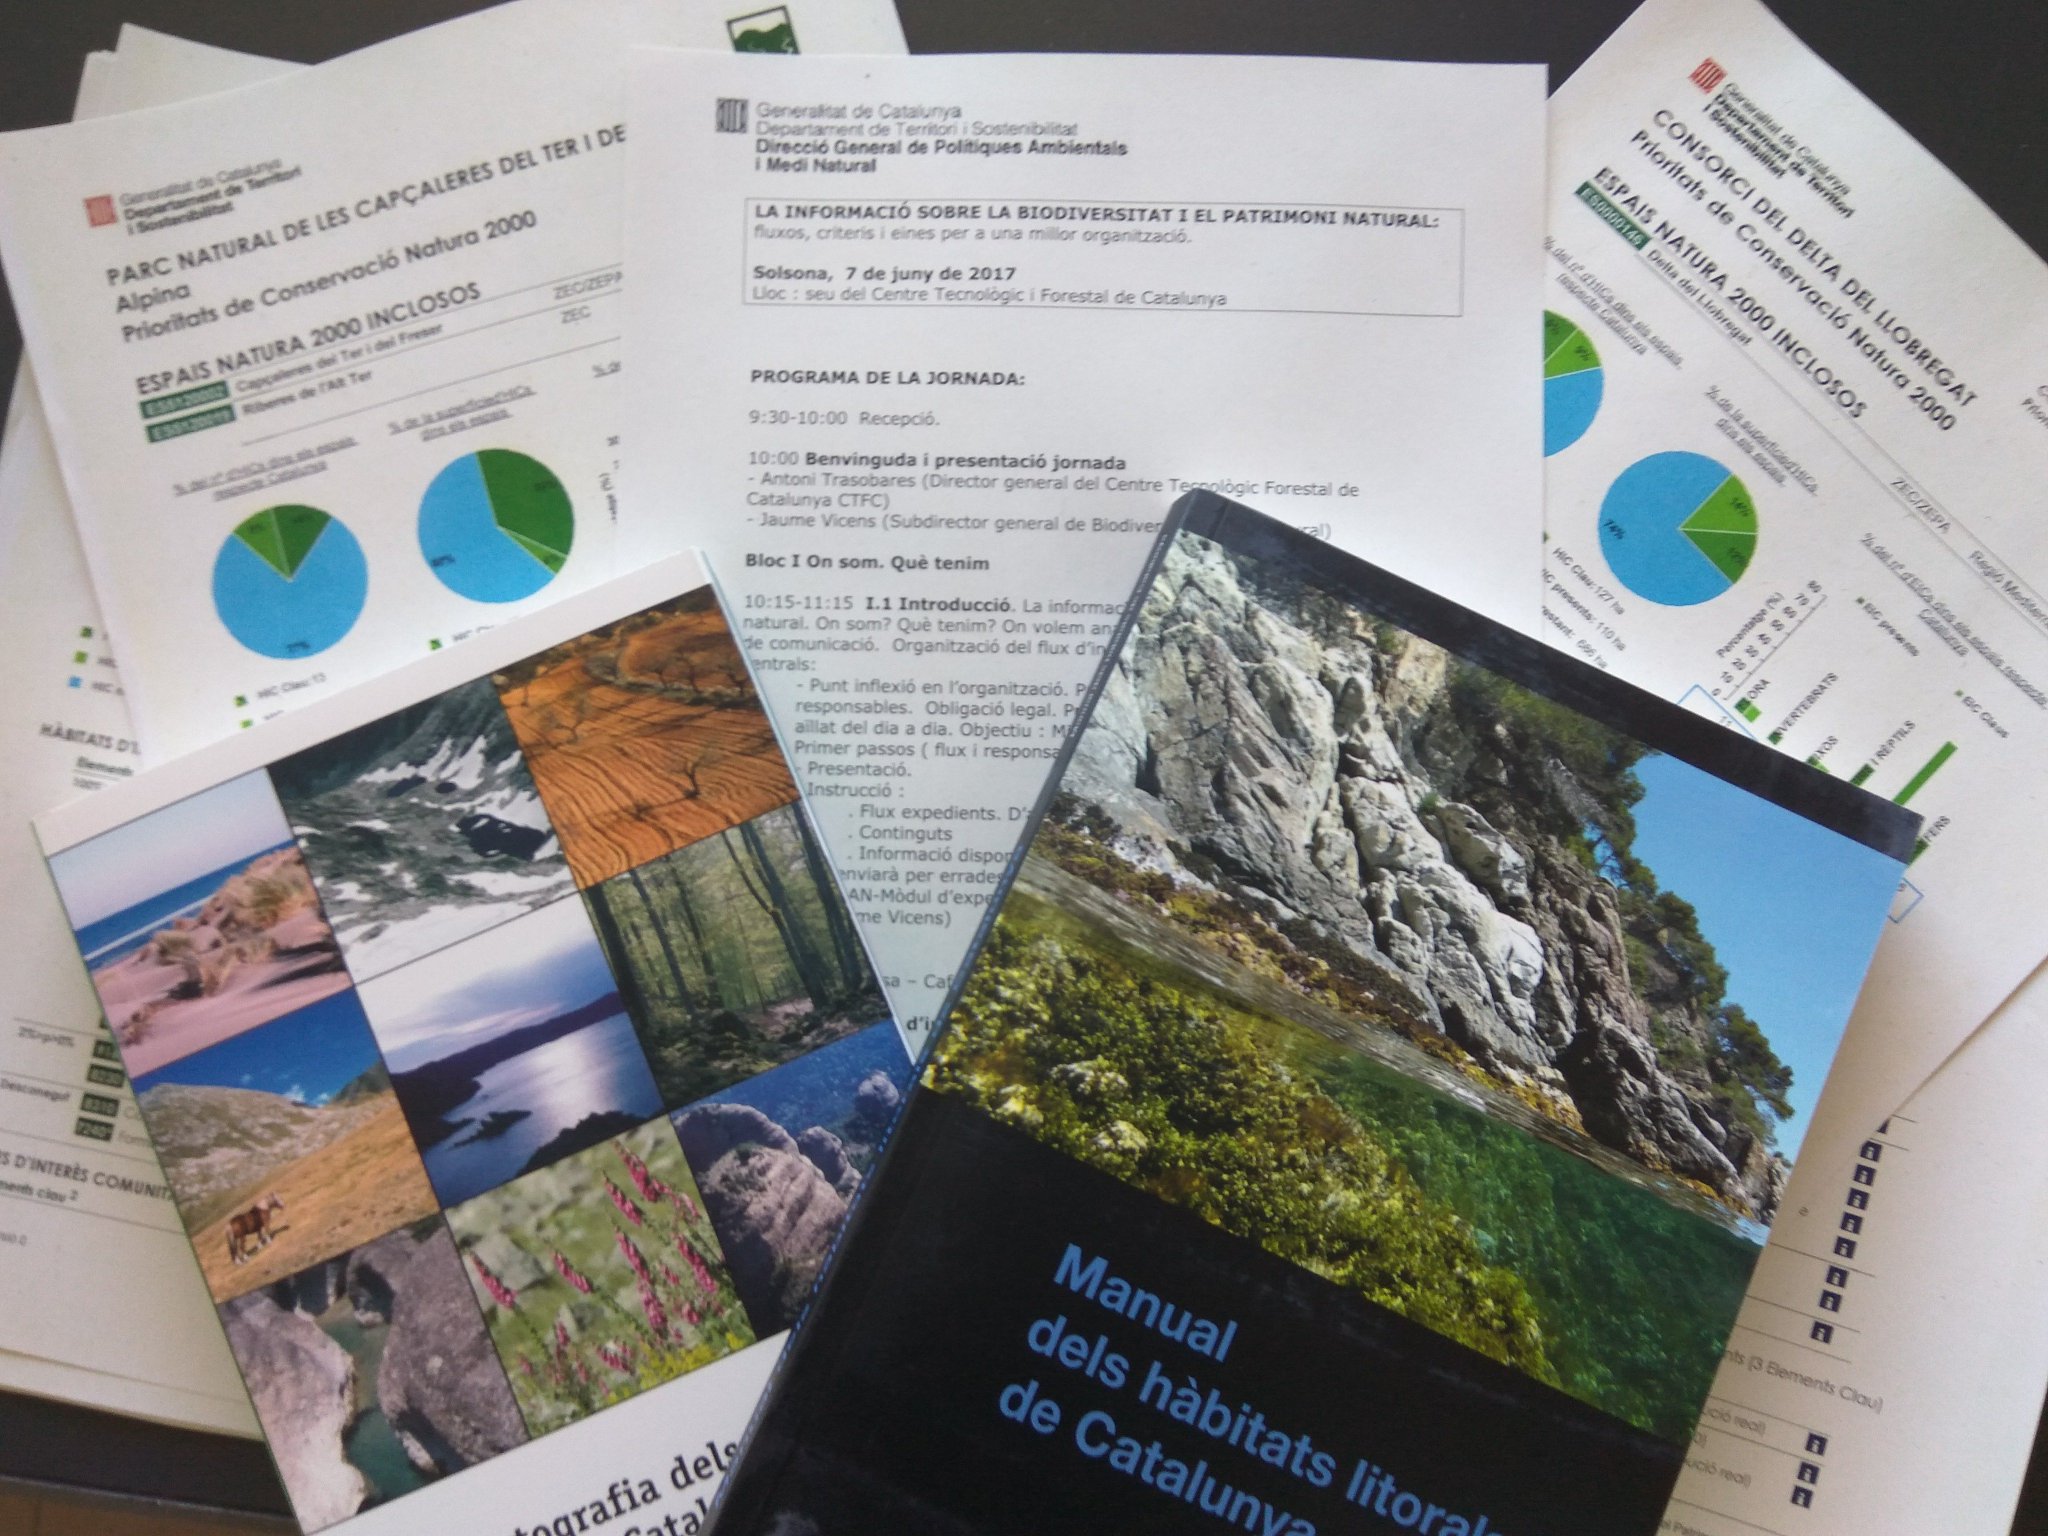 Catalan biodiversity information